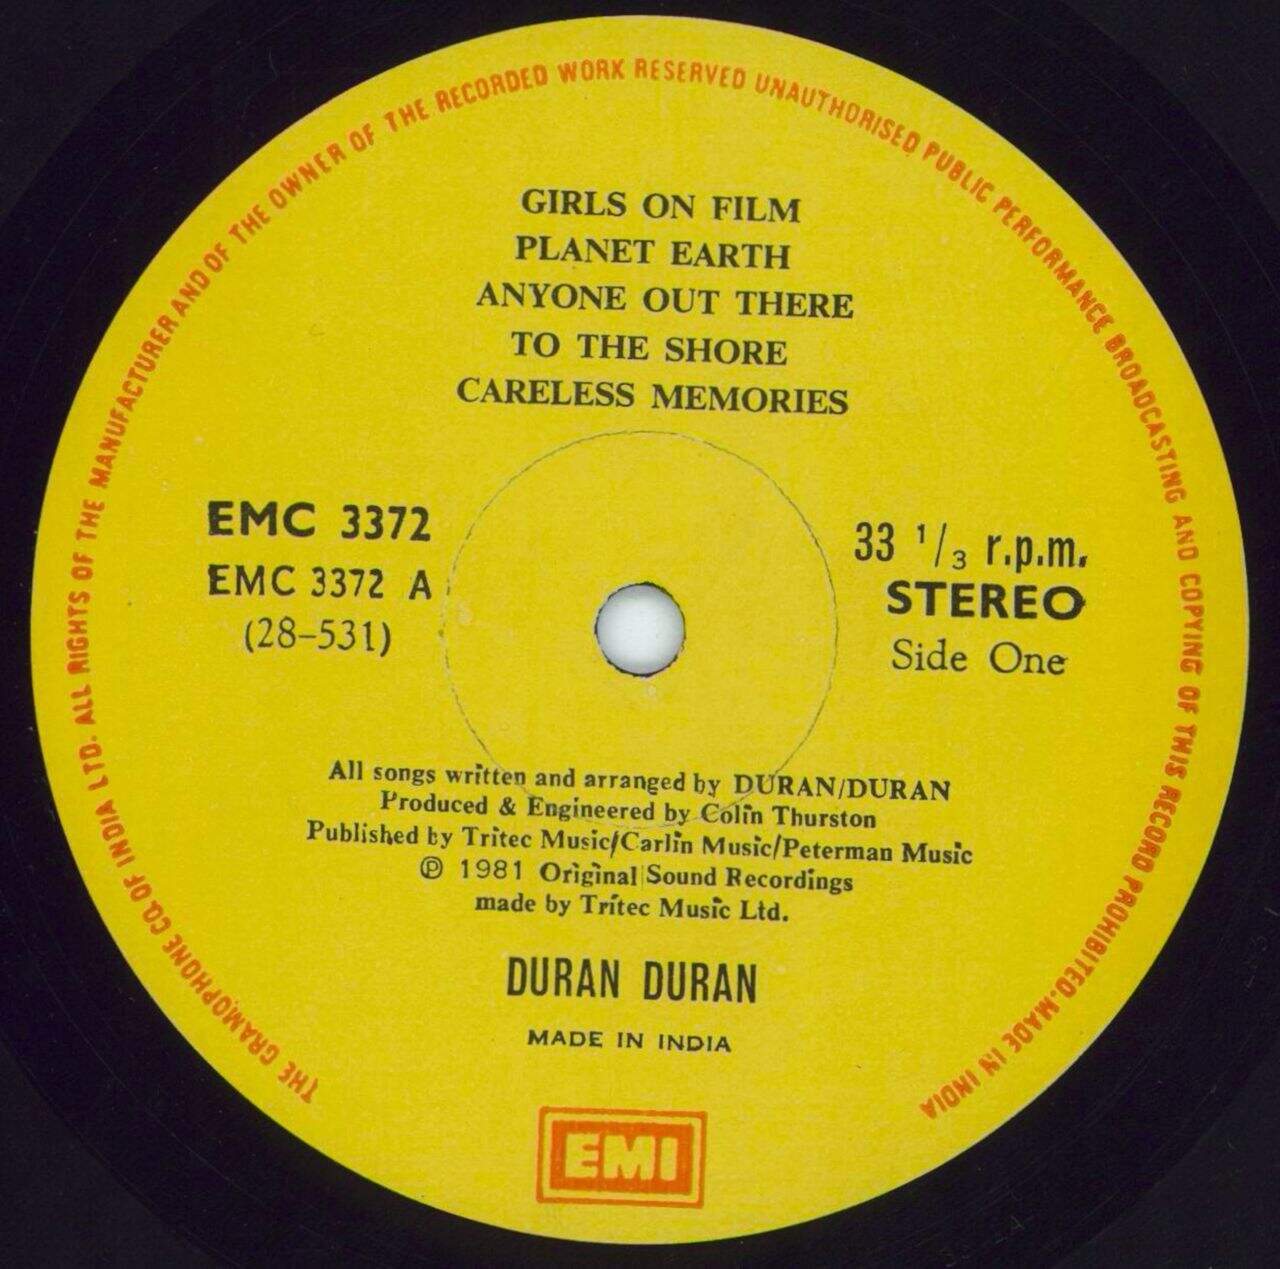 Duran Duran Duran Duran Indian Vinyl LP